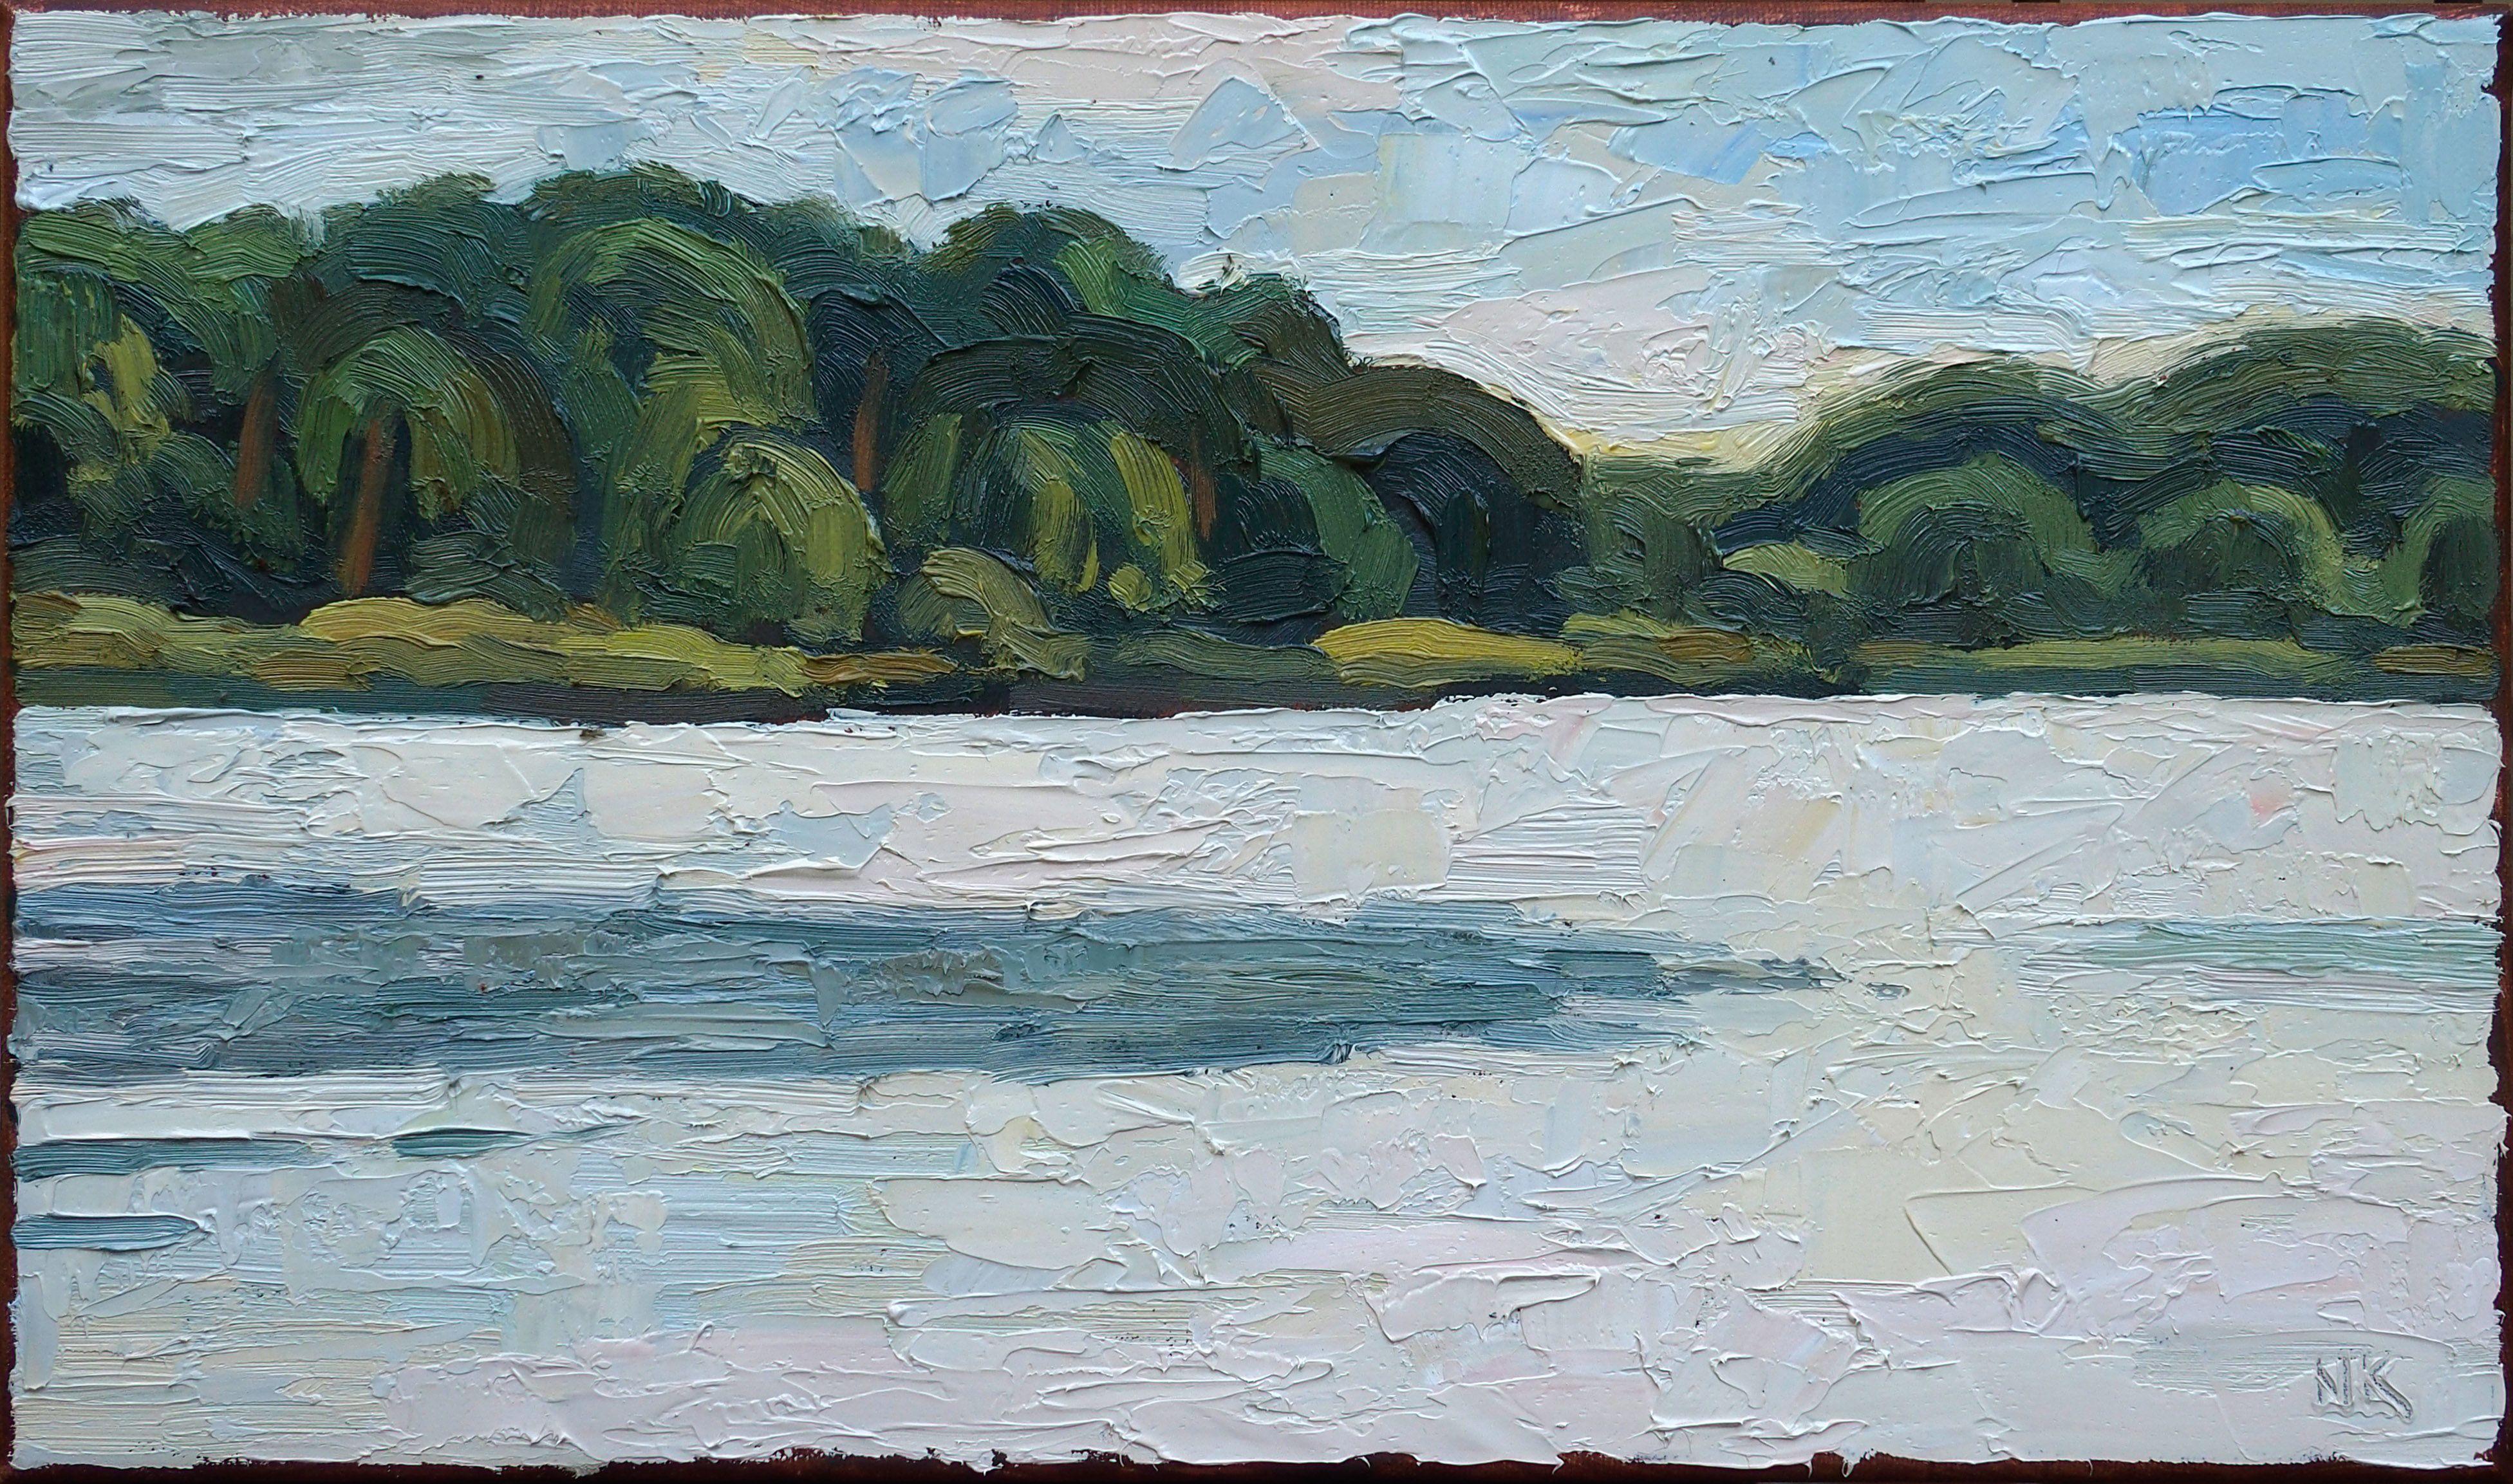 Nikolai Kraneis Landscape Painting - Lake reflections, Painting, Oil on Canvas